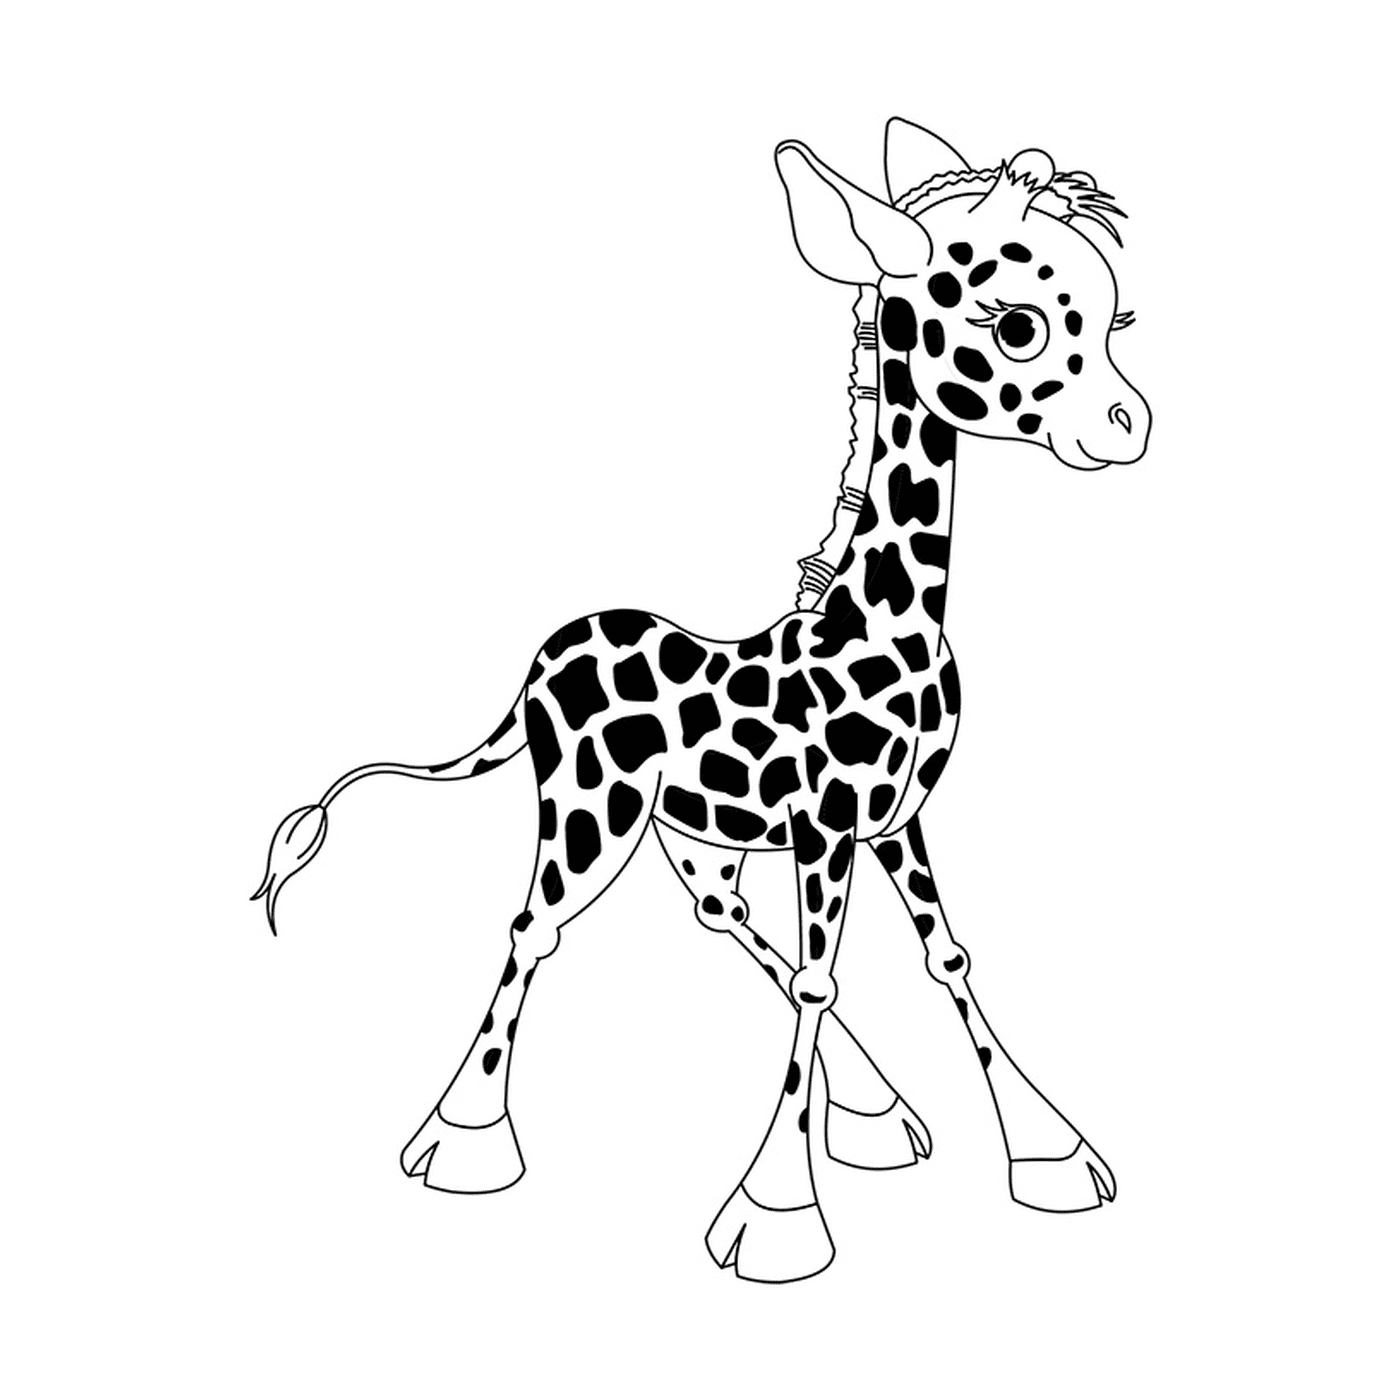  Una giraffa in piedi 